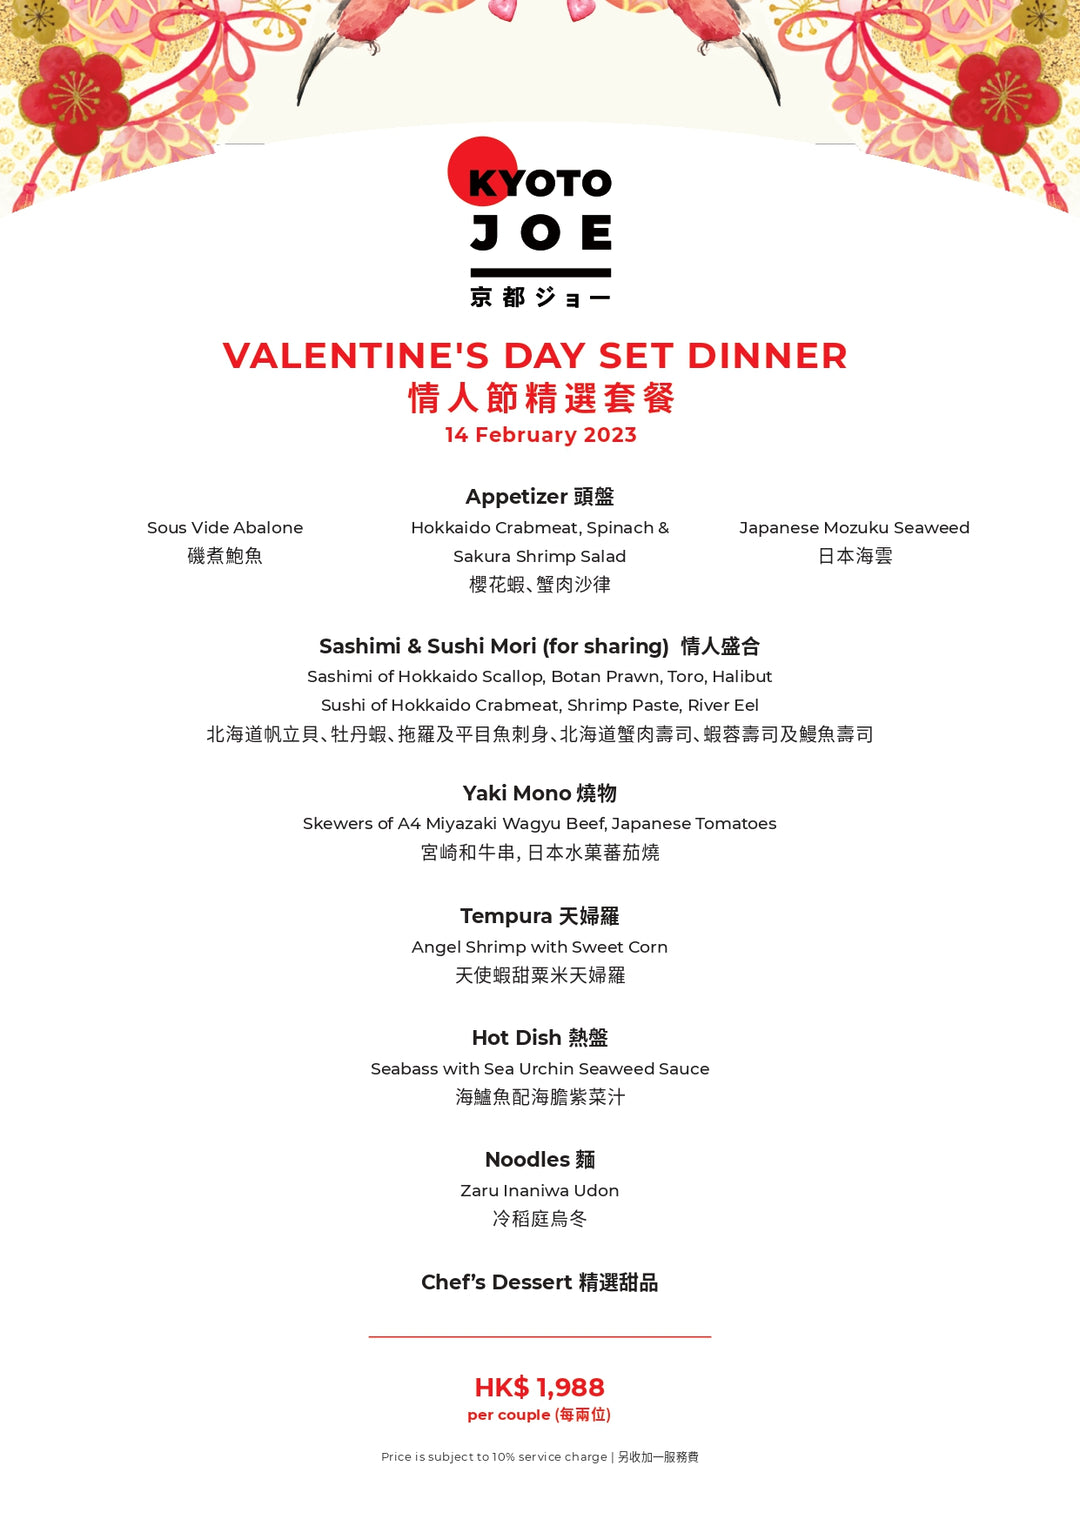 Kyoto Joe Valentine's Day Dinner (February 14)